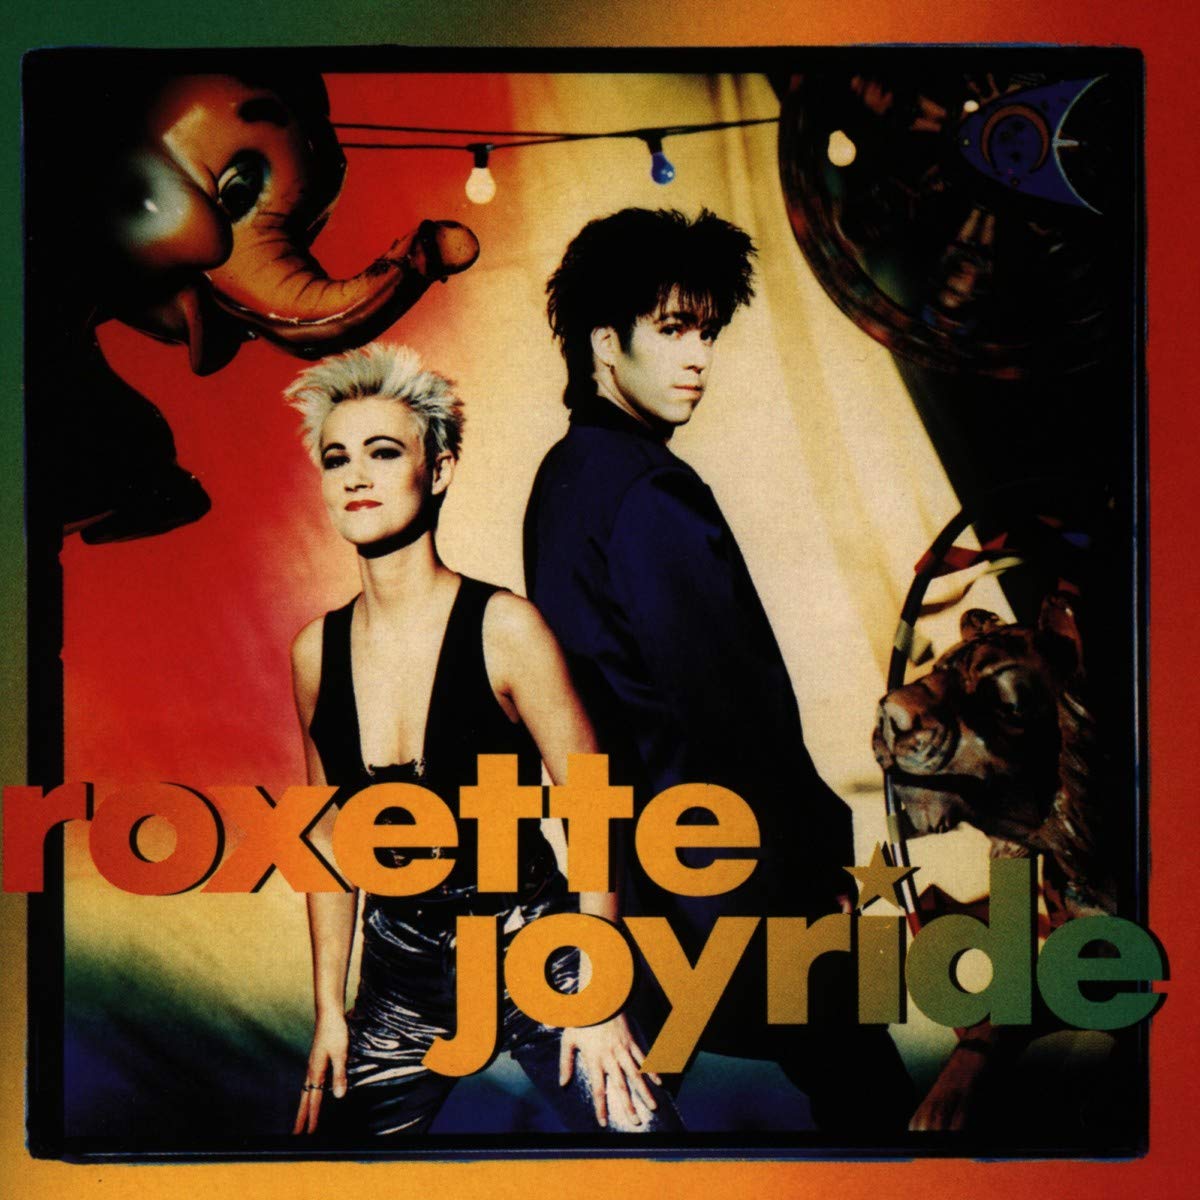 Roxette "Joyride" 30th Anniversary LP